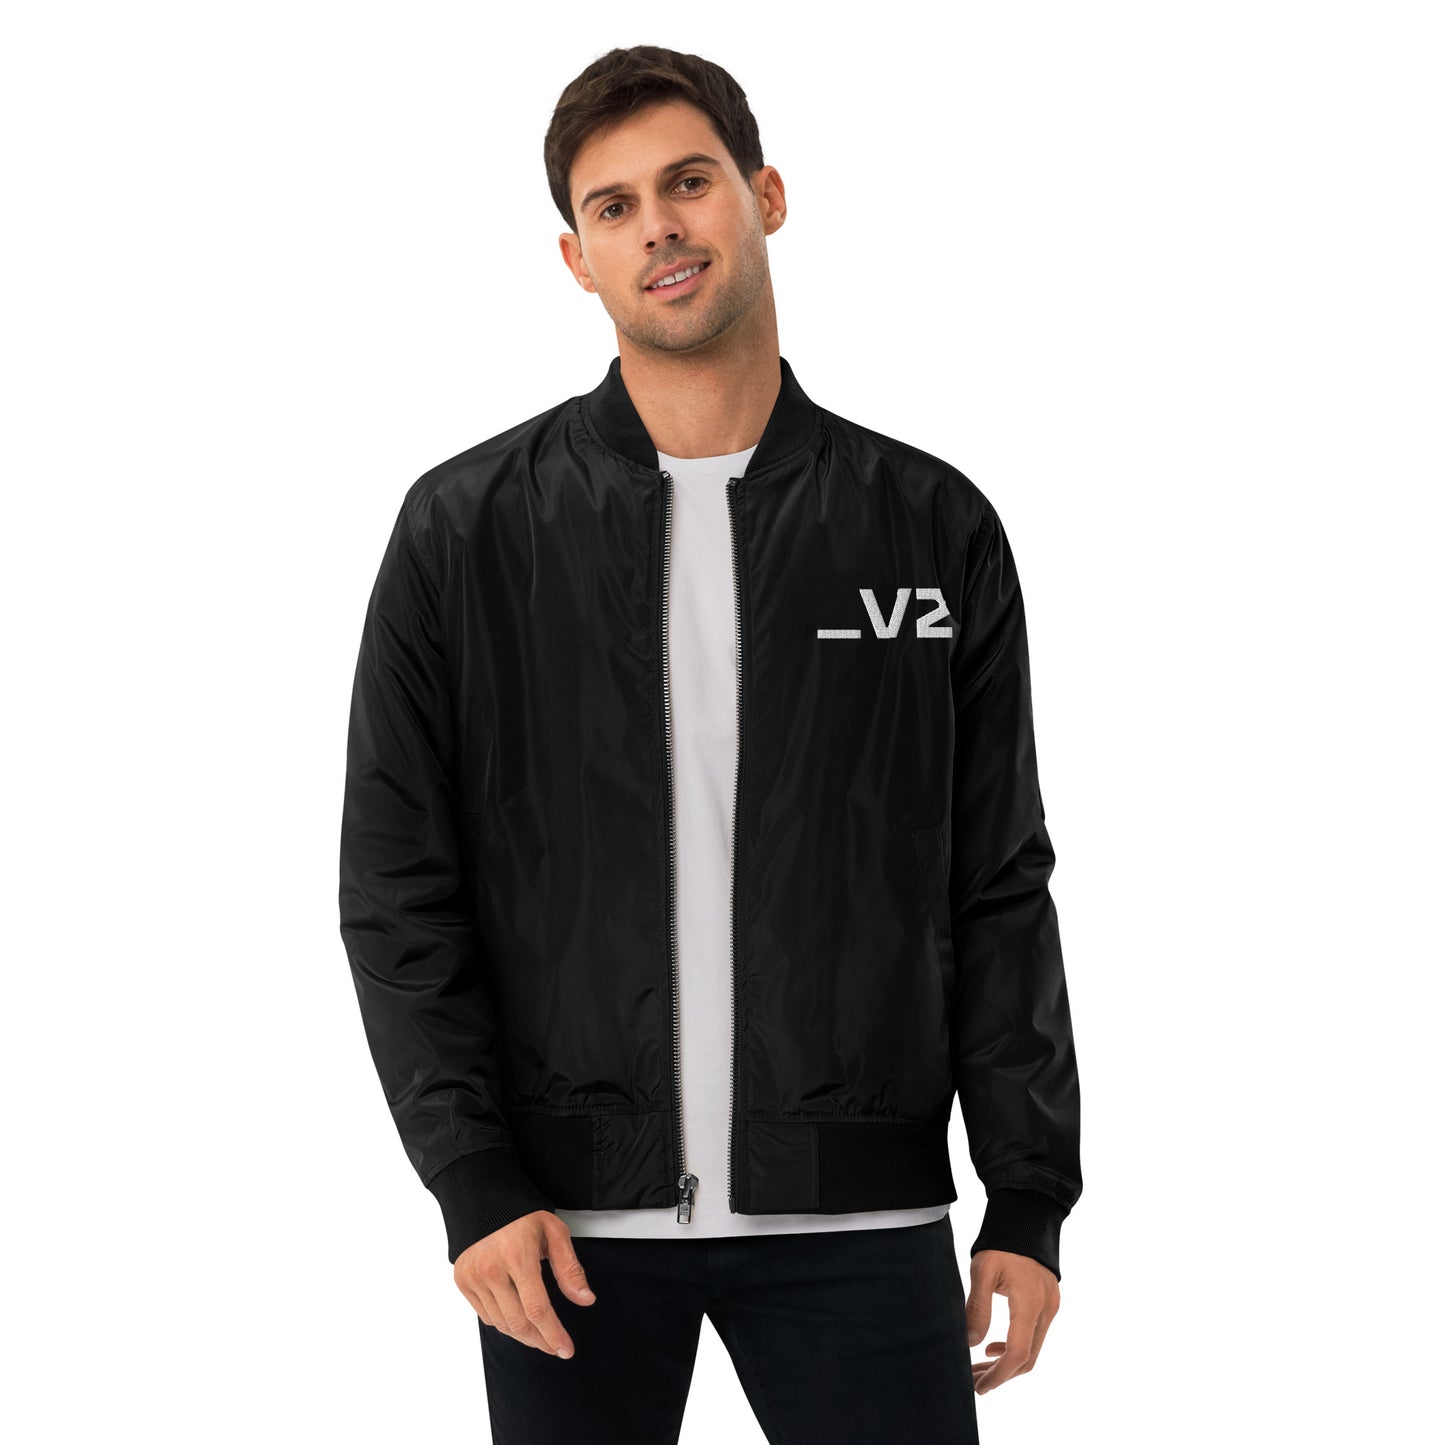 _V2 Embroidered Premium recycled bomber jacket